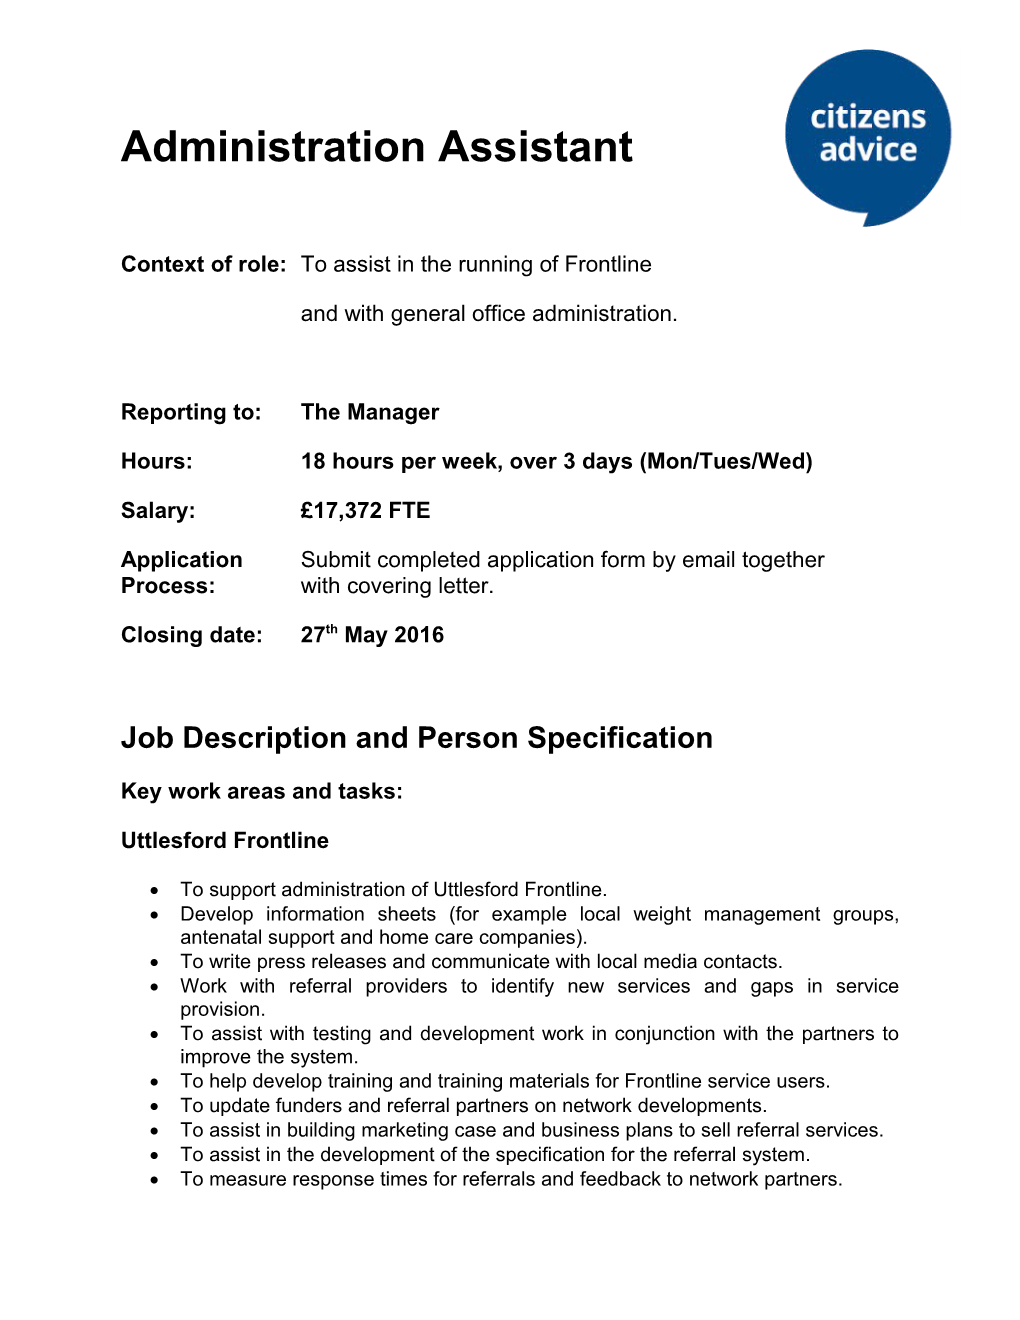 Administrative Support (Debt) Job Description and Person Specification